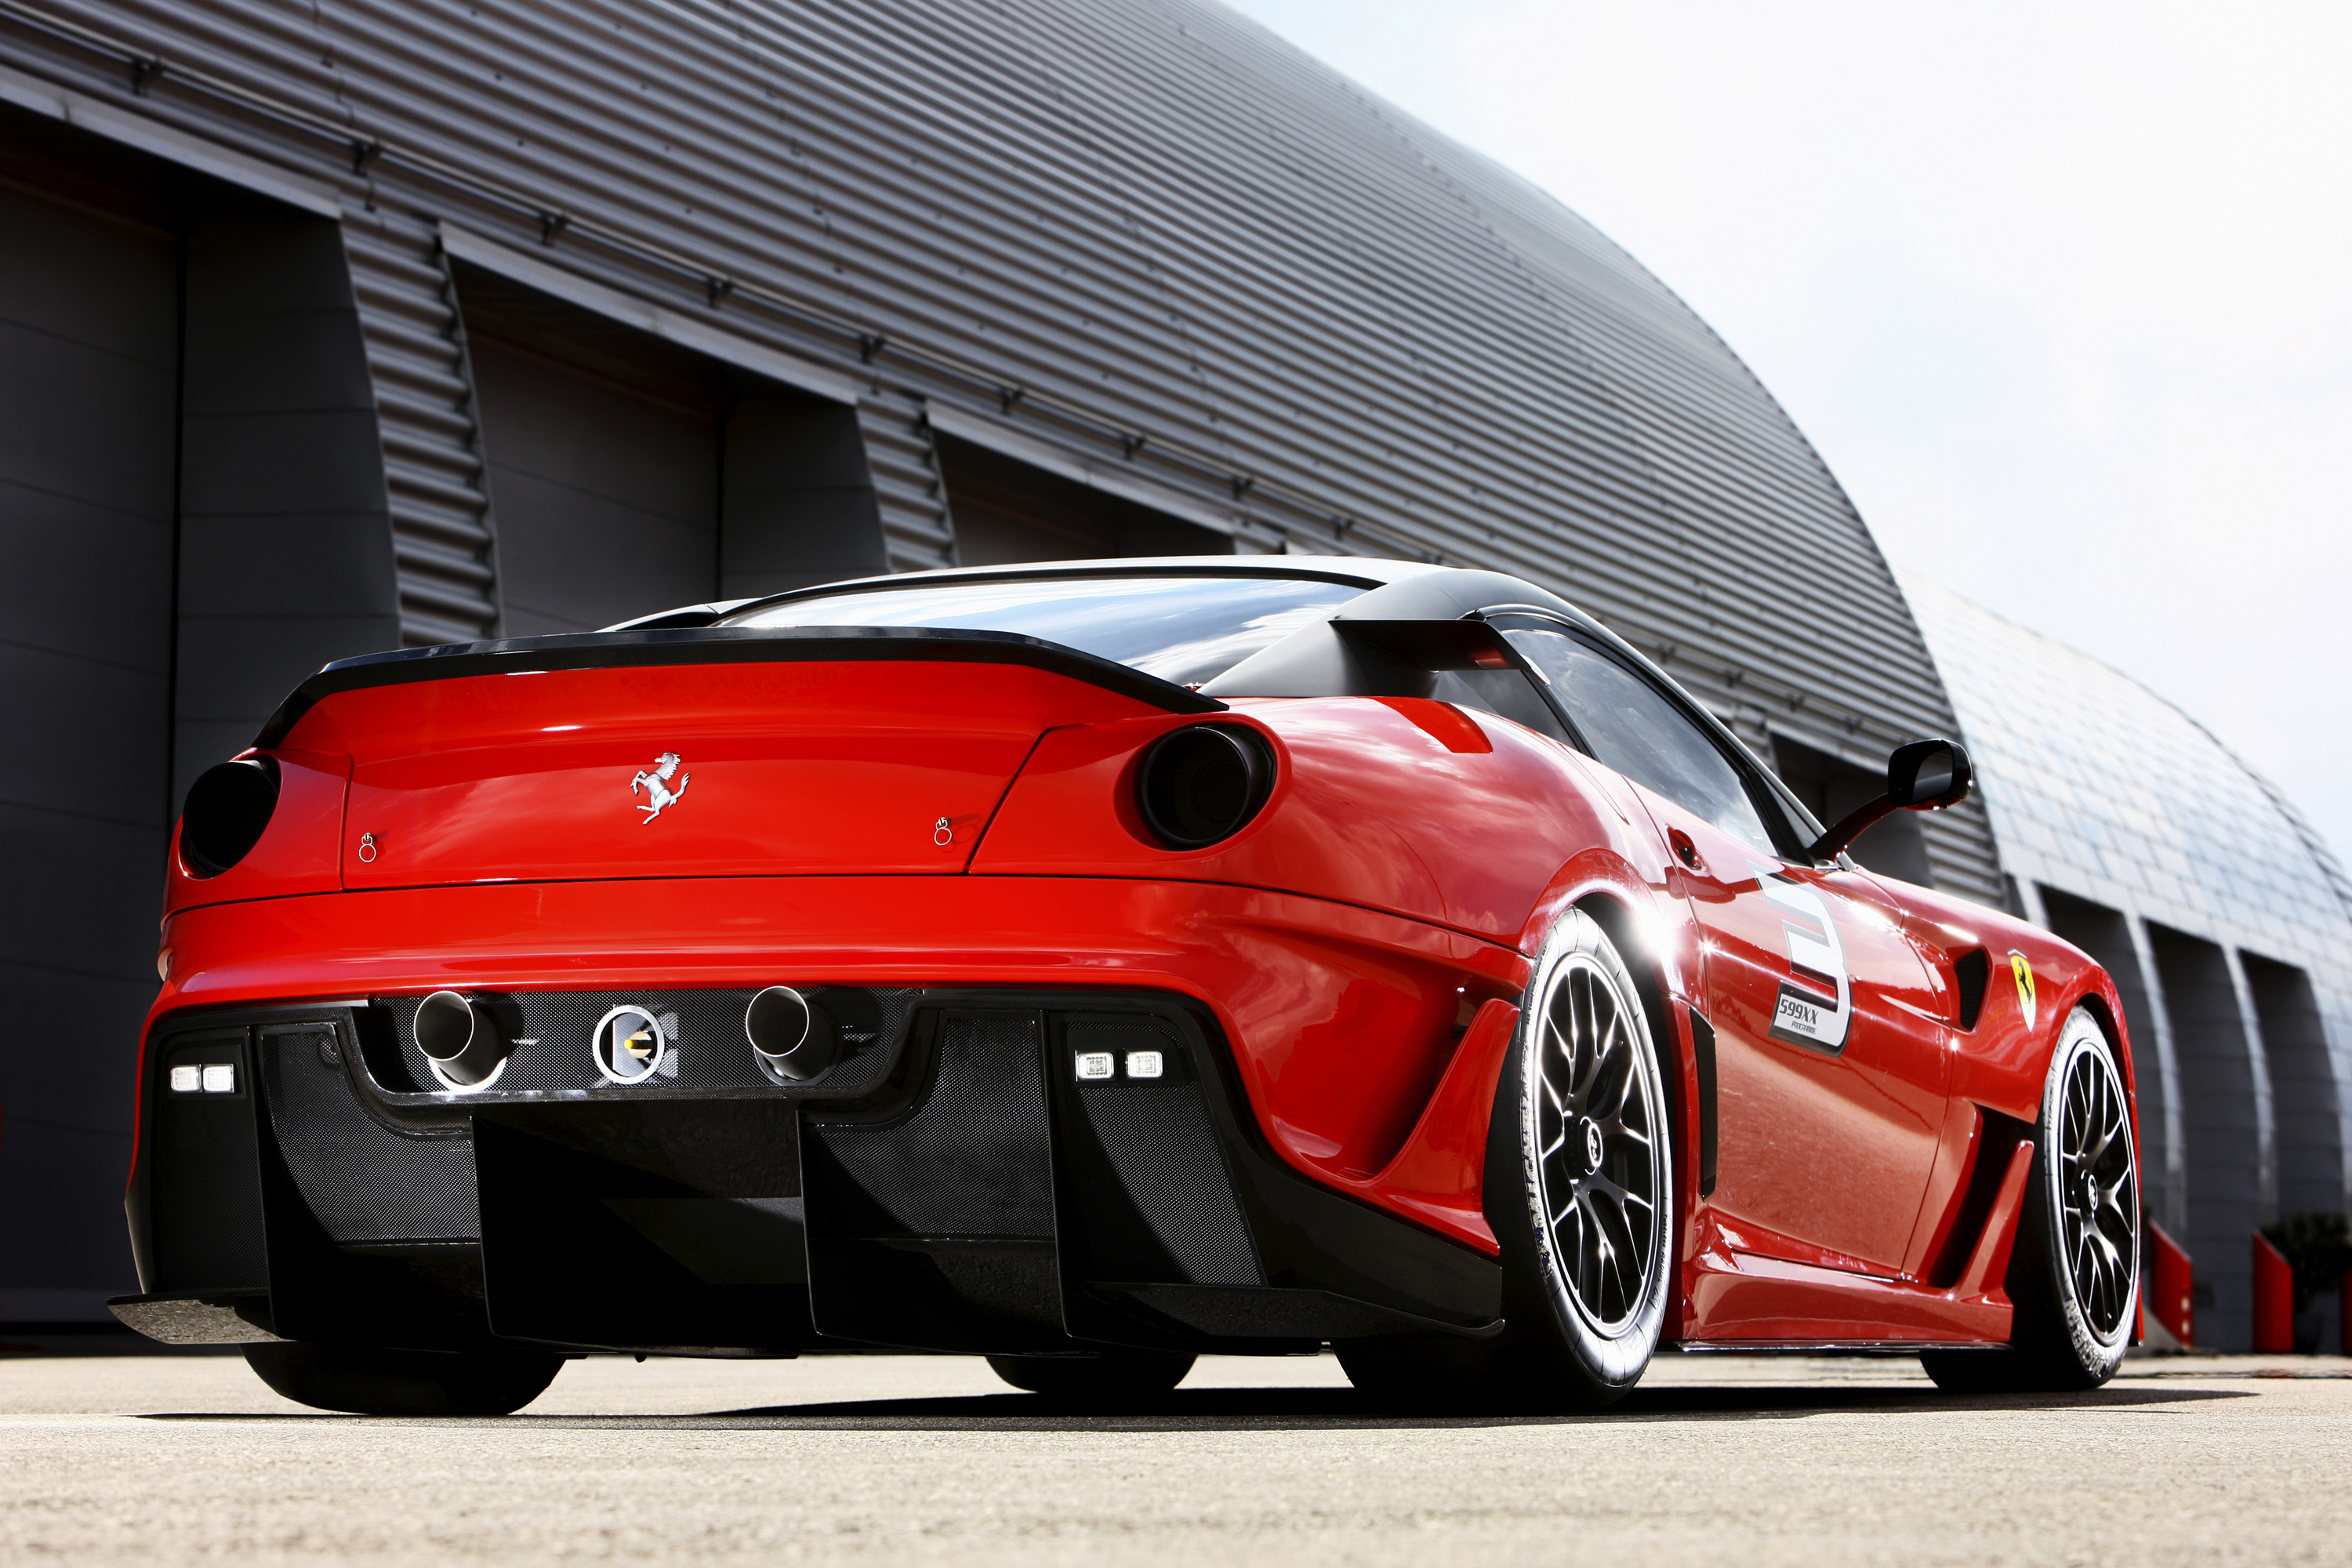 cars, Ferrari, vehicles, Ferrari 599XX, low-angle shot, rear angle view - desktop wallpaper